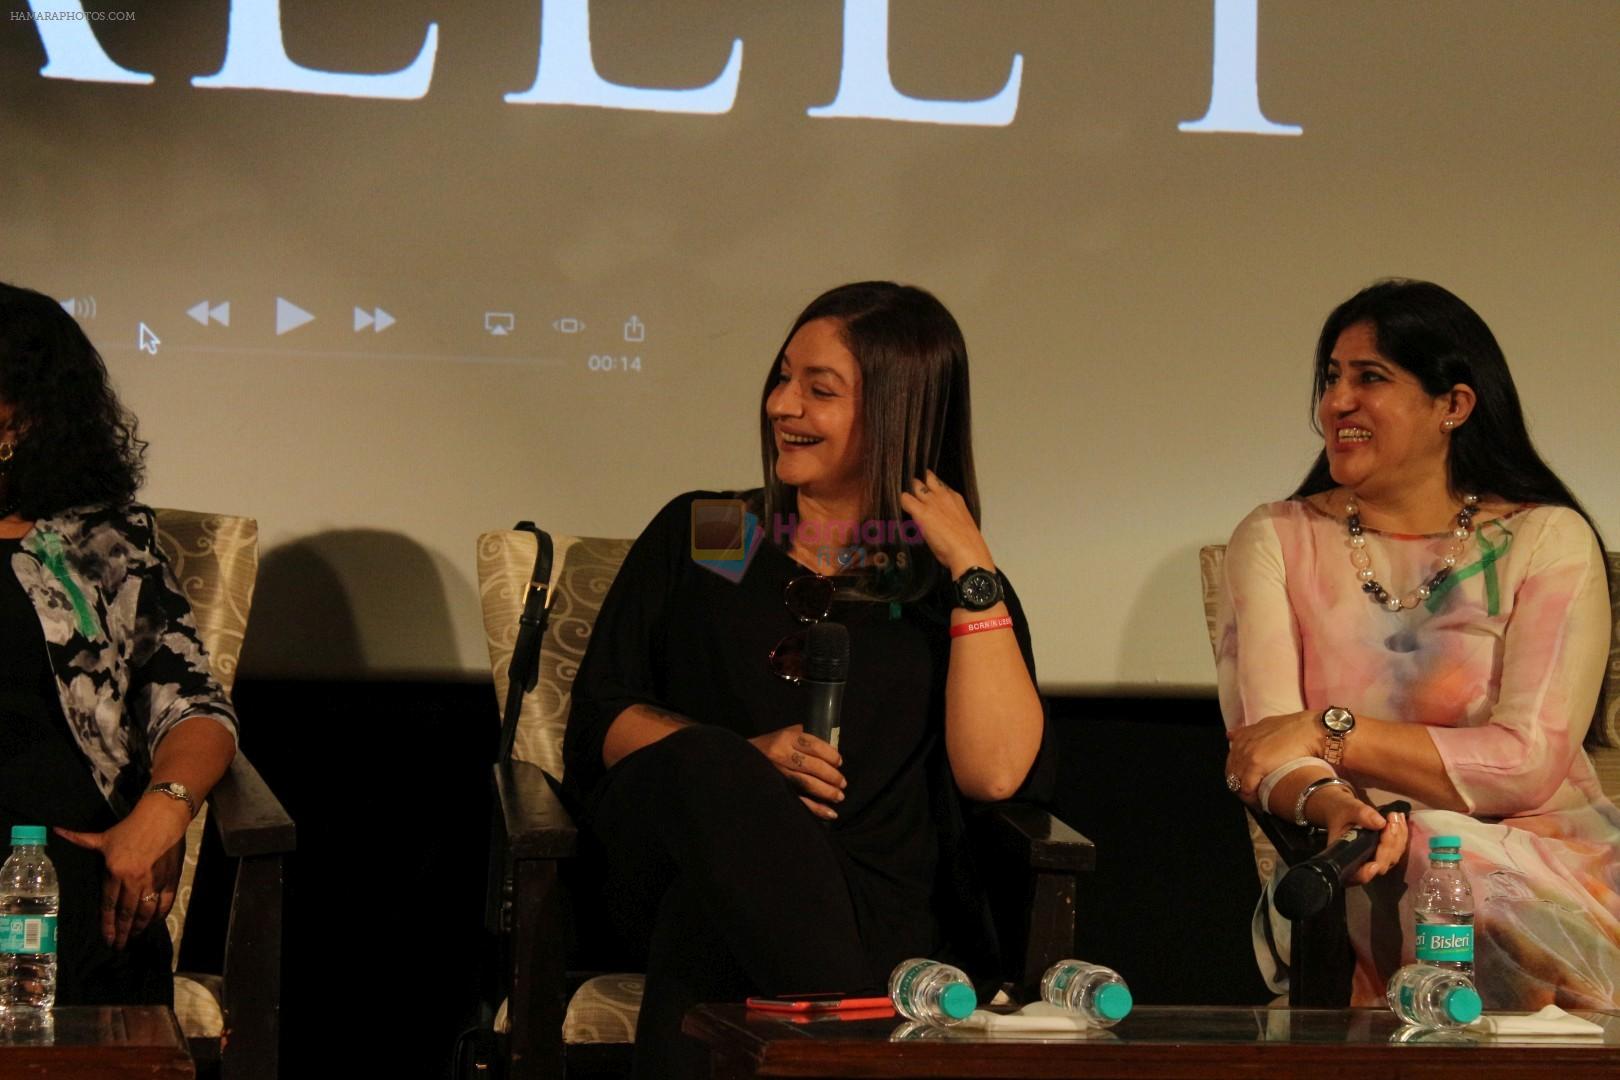 Pooja BhattTalk About Film The Valley on 10th Oct 2017